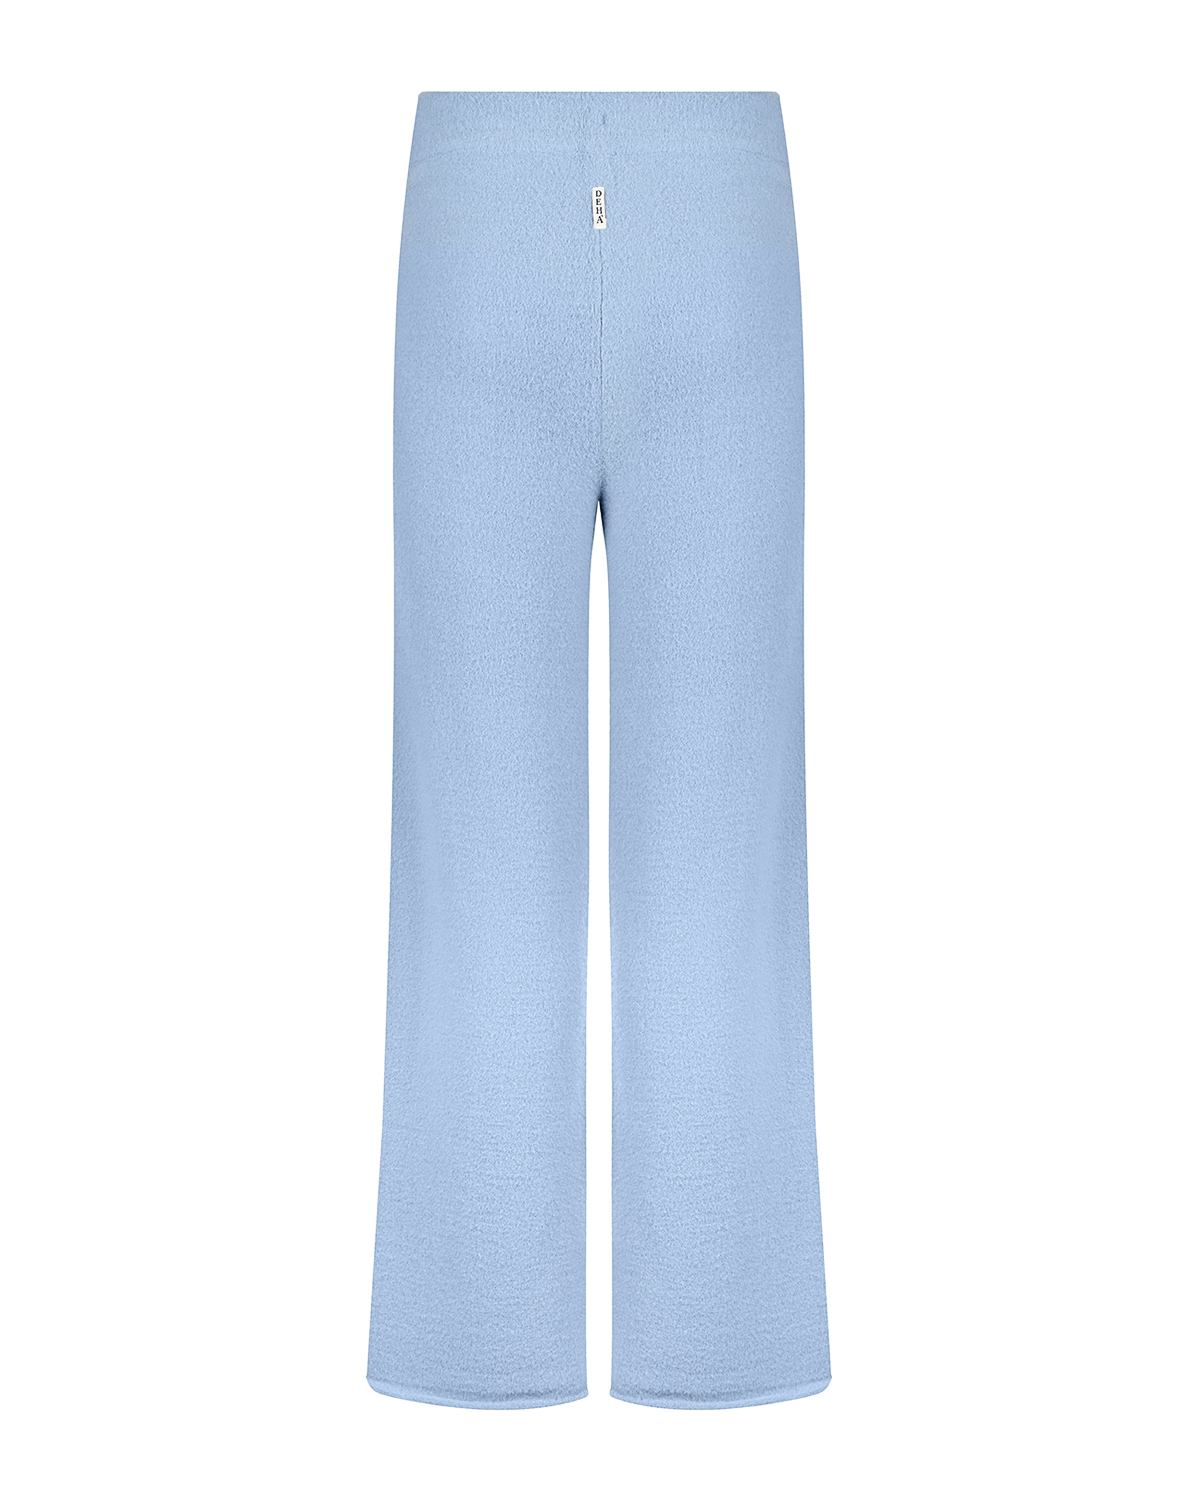 Комплект: топ и брюки, голубой Deha, размер 40 - фото 5